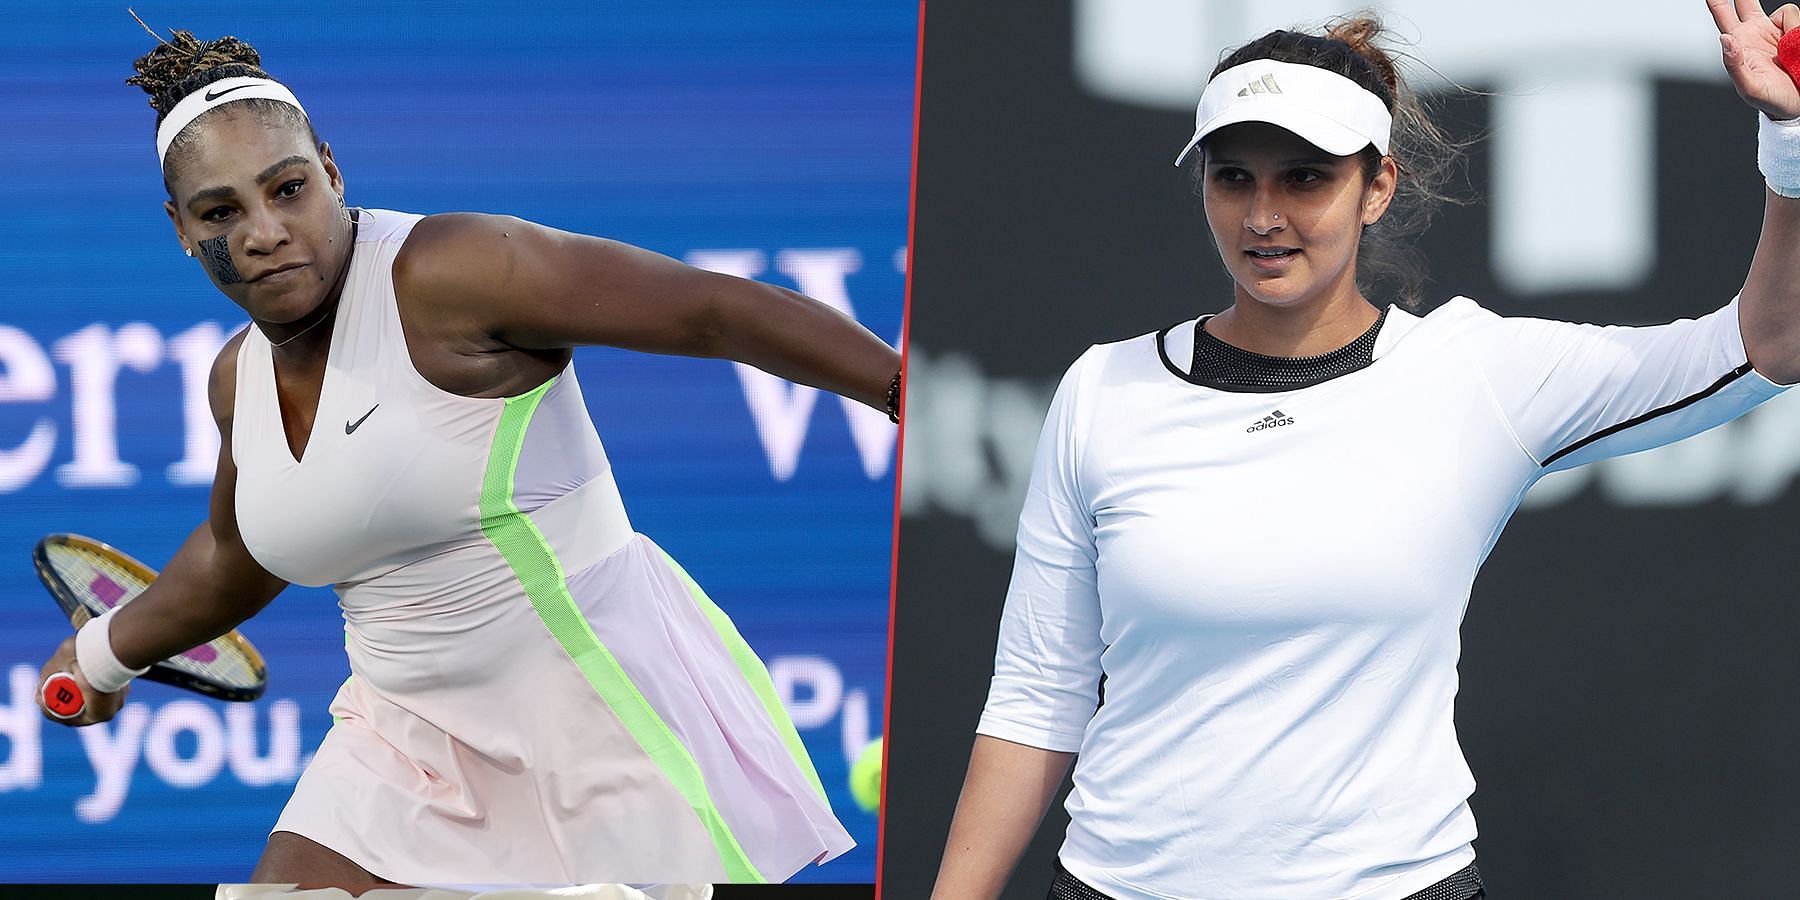 Serena Williams and Sania Mirza